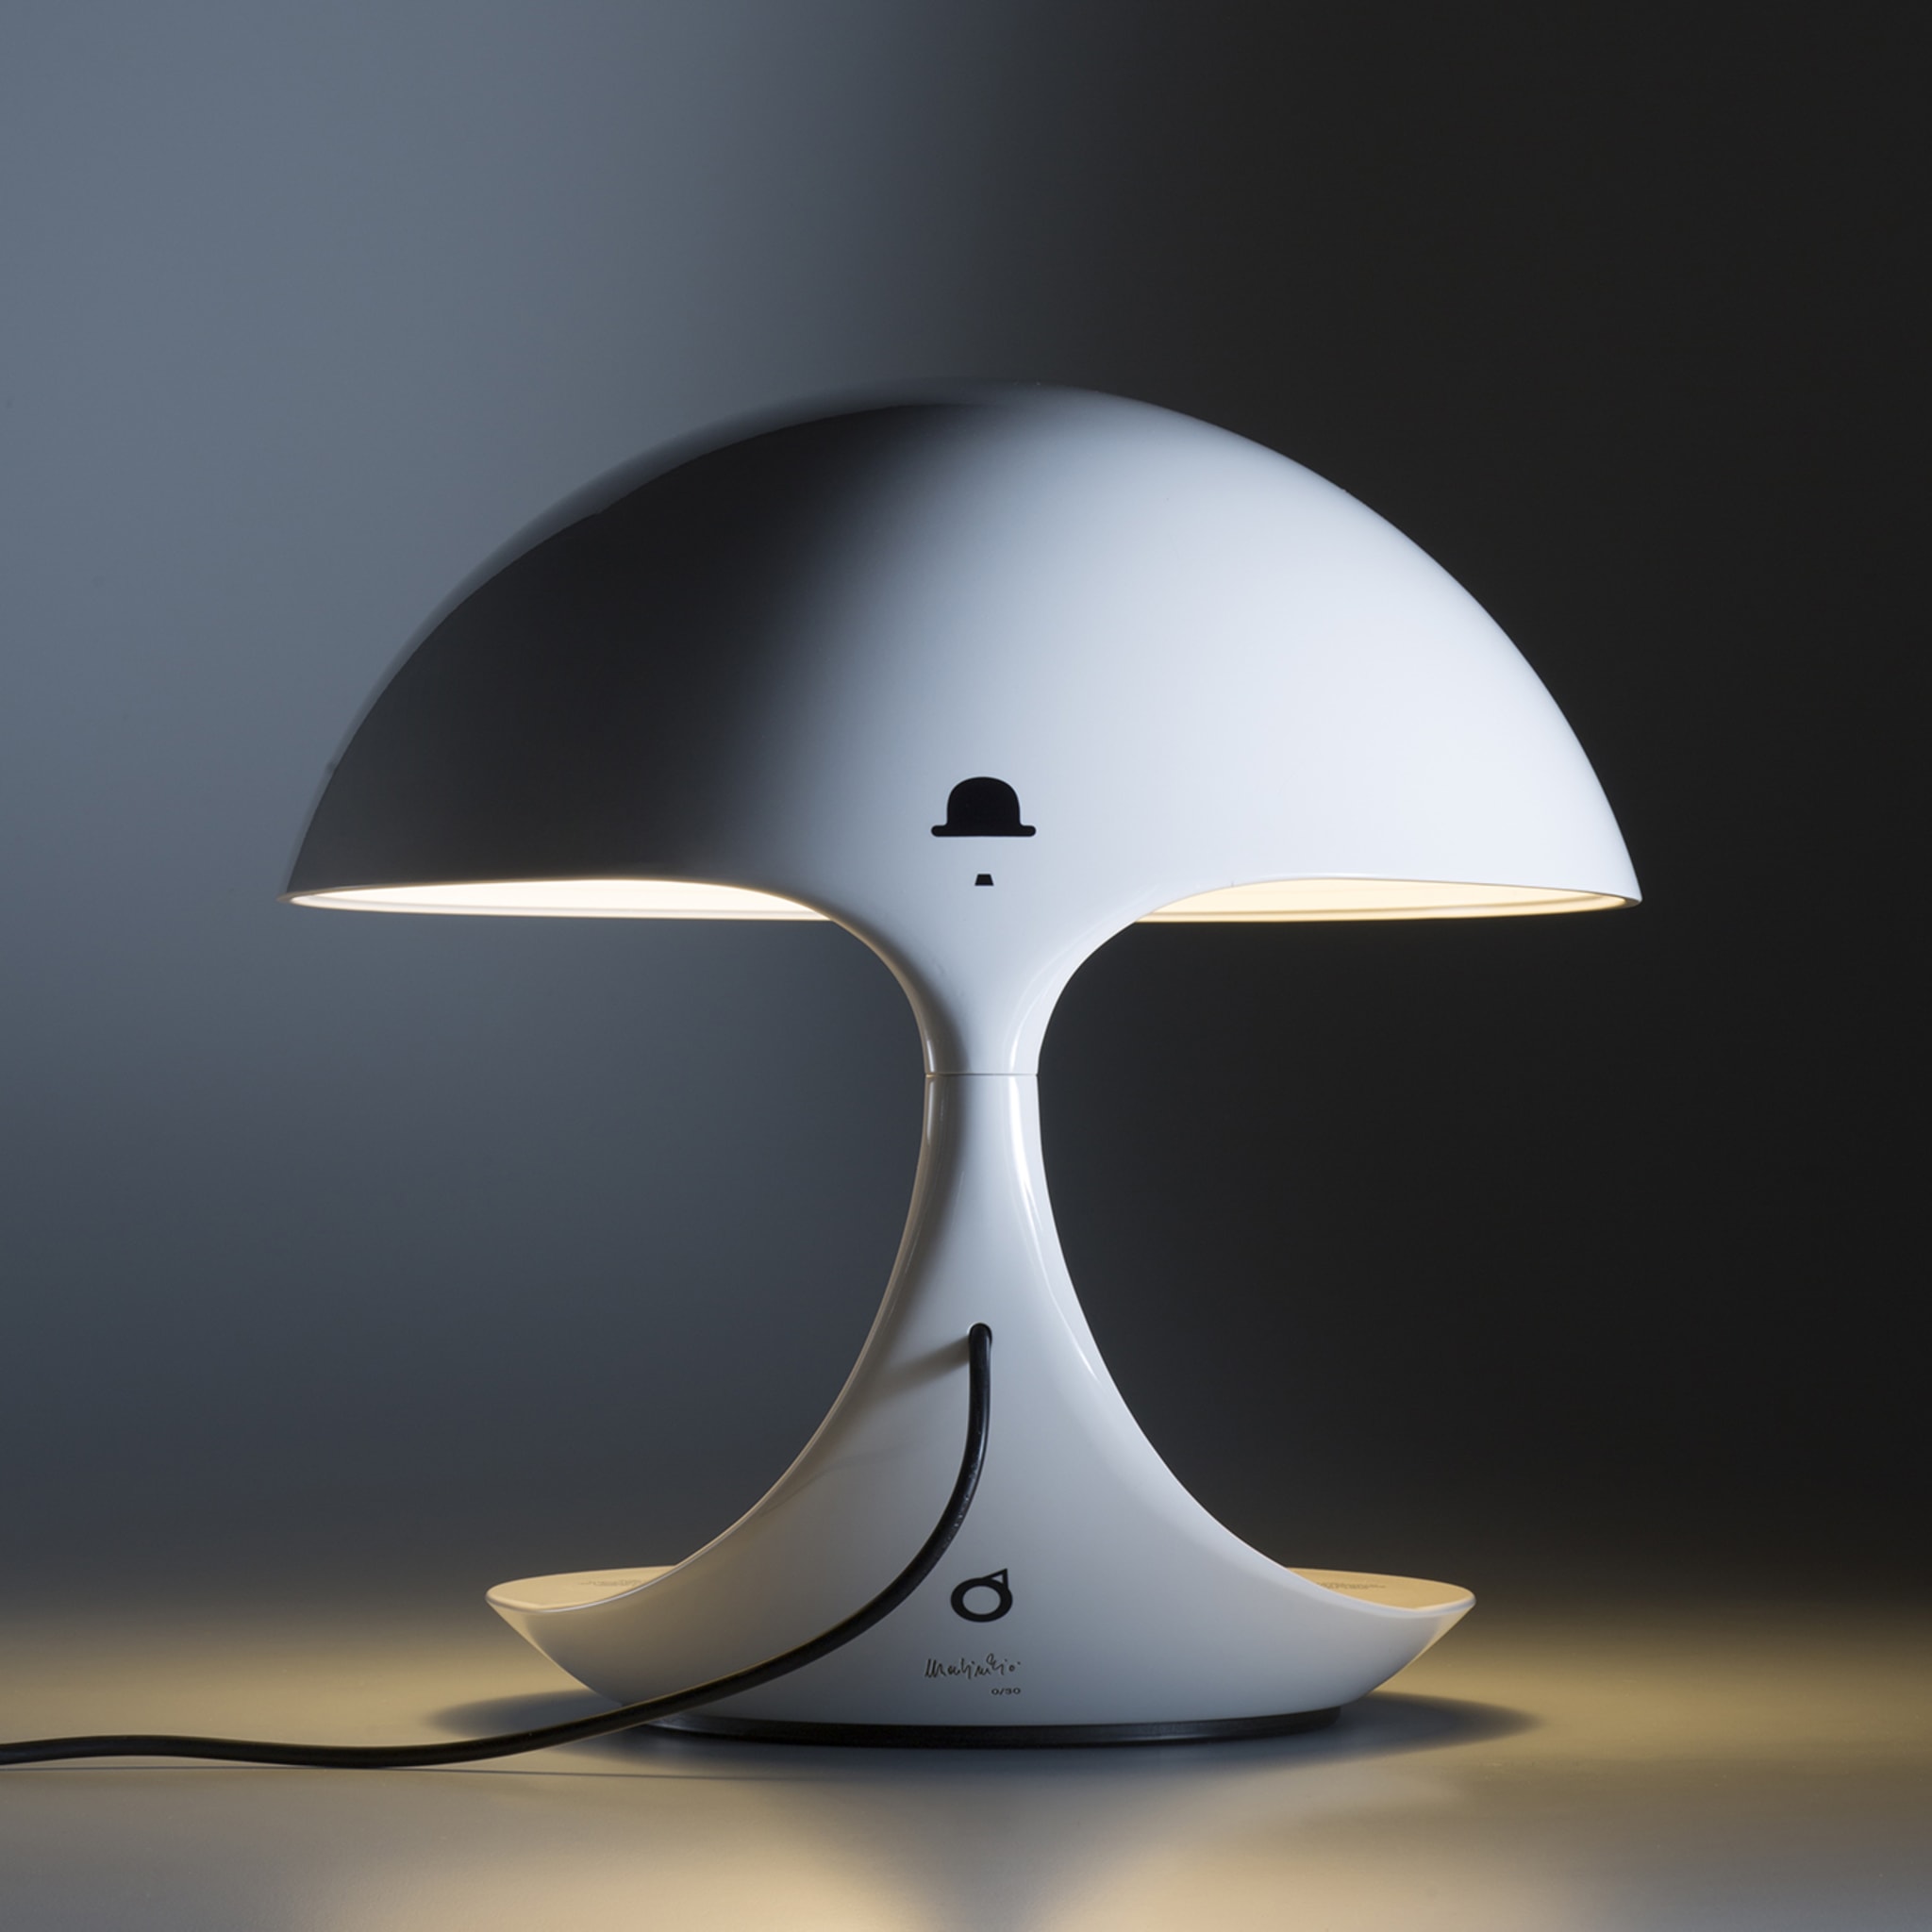 Cobra Texture White Table Lamp by Studiovo - Alternative view 2